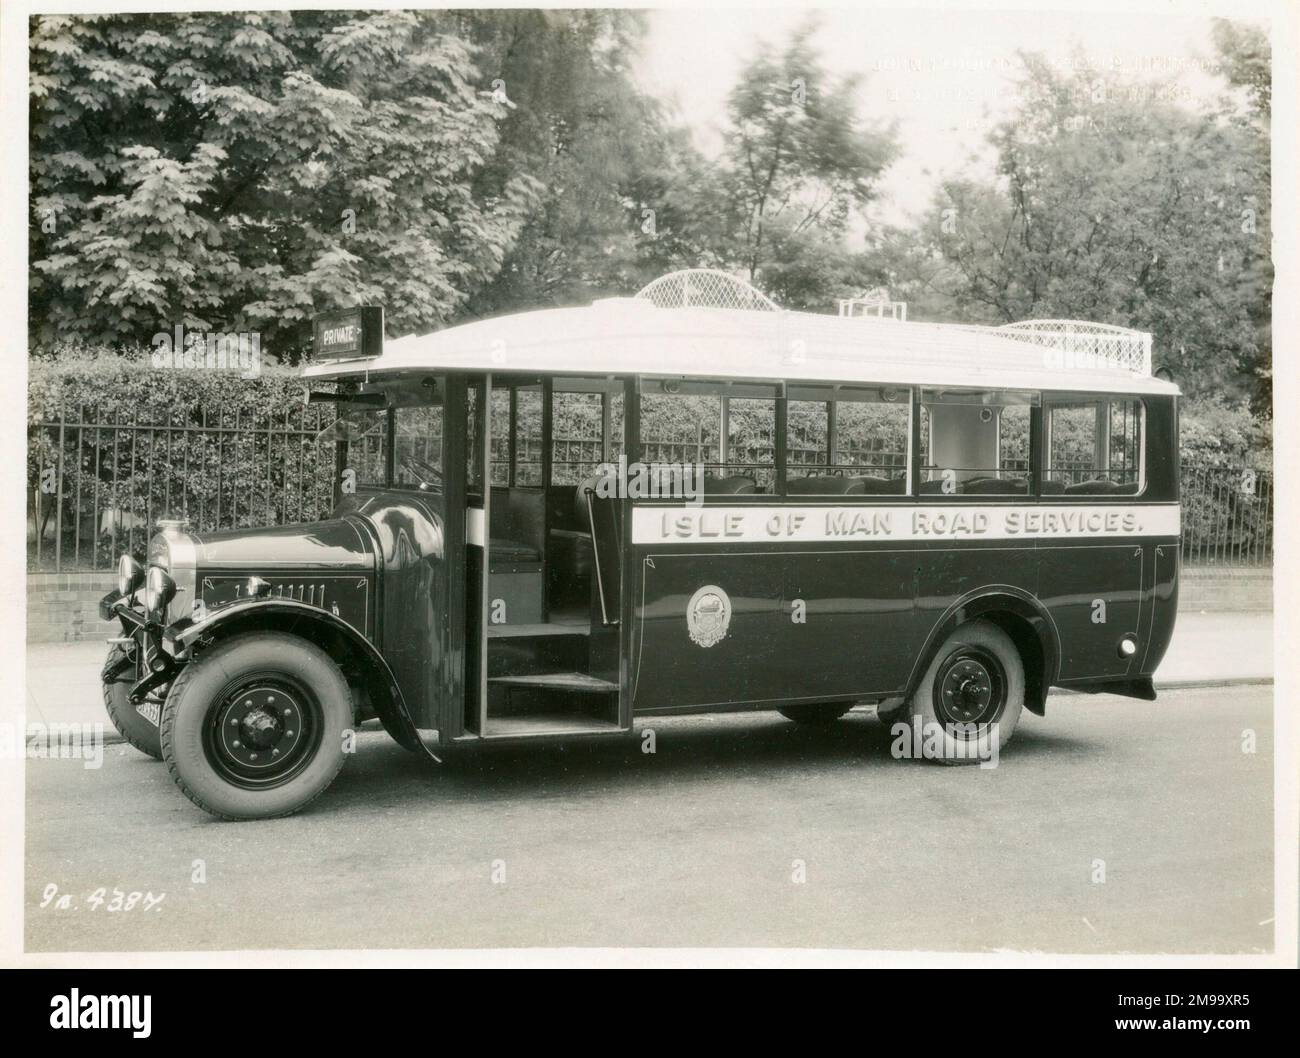 Isle of Man Road Services 'Emerald' bus, Wadham. Stock Photo